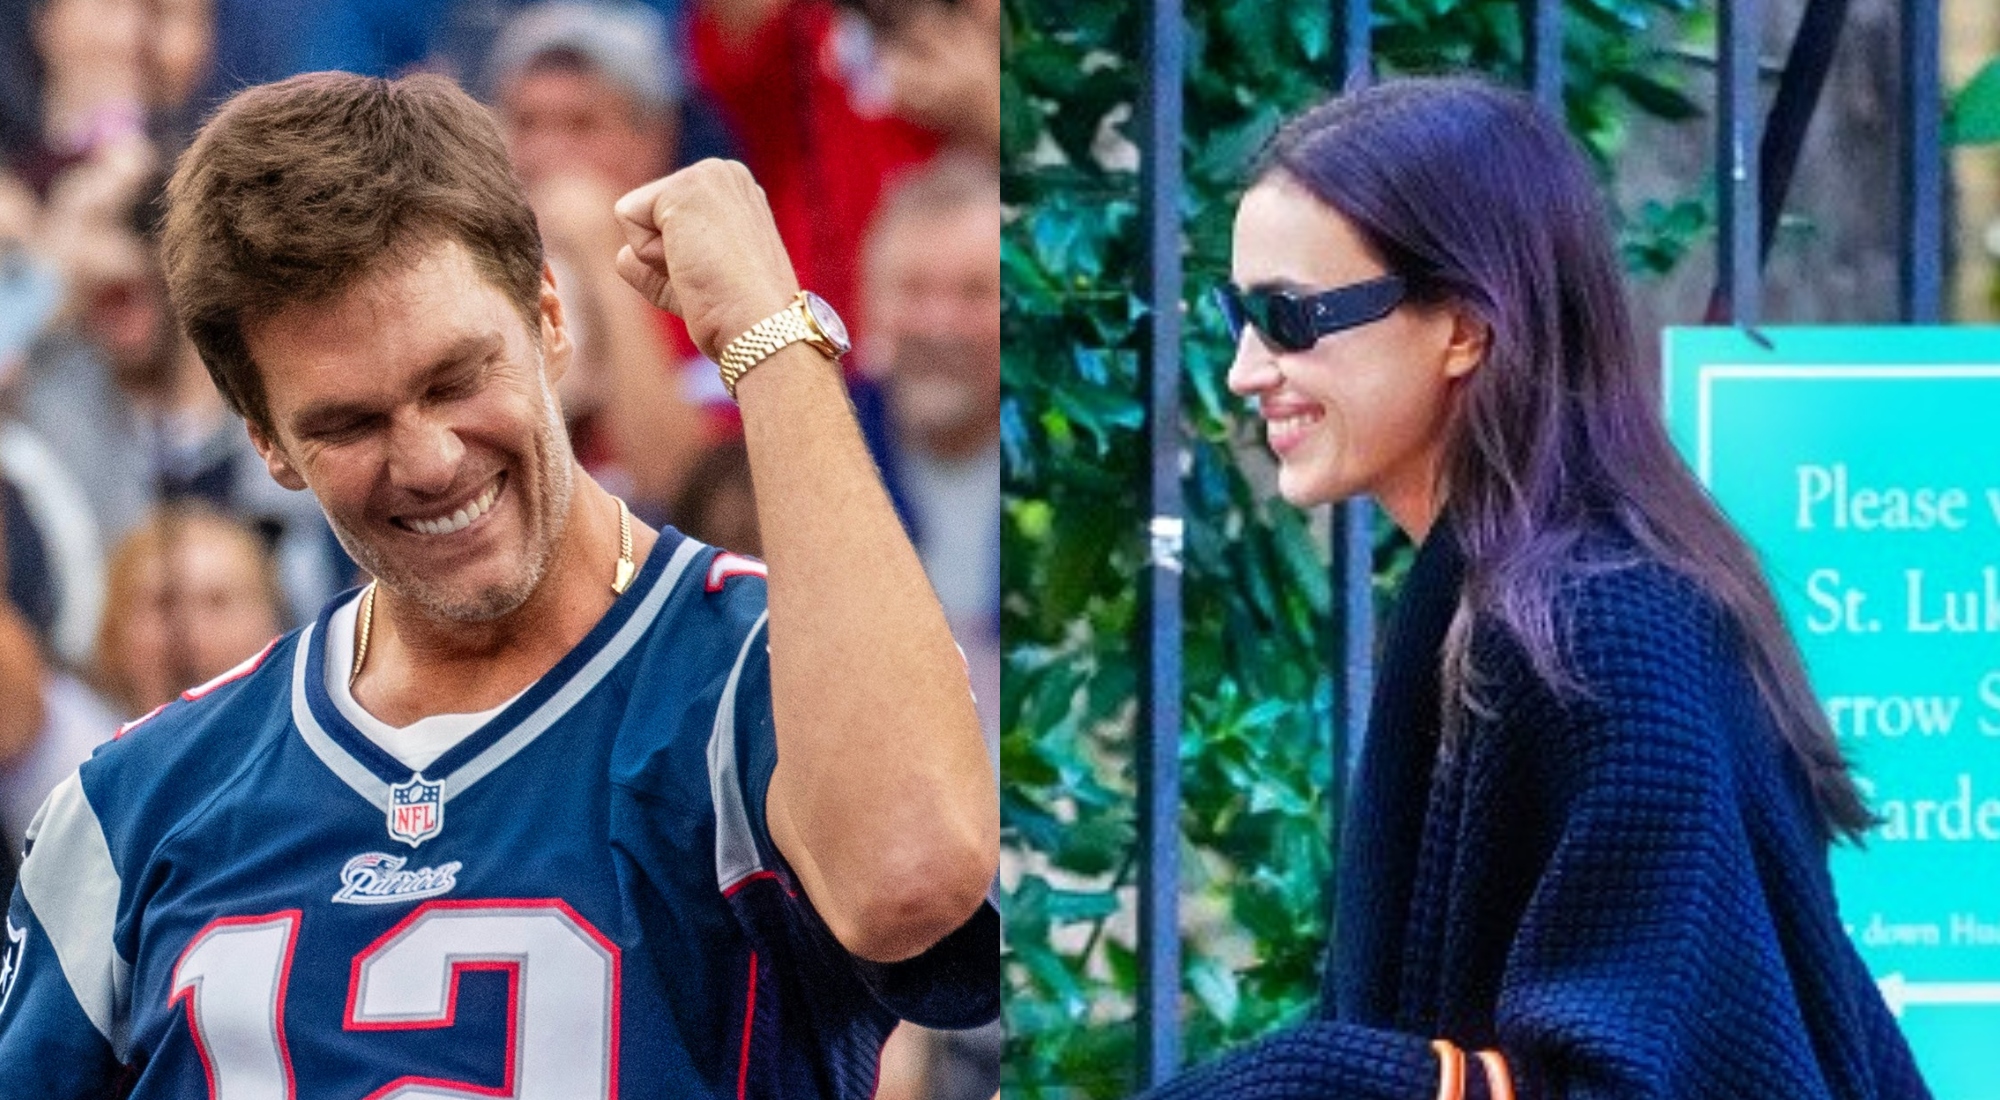 Irina Shayk vents after Tom Brady romance: 'F*** you